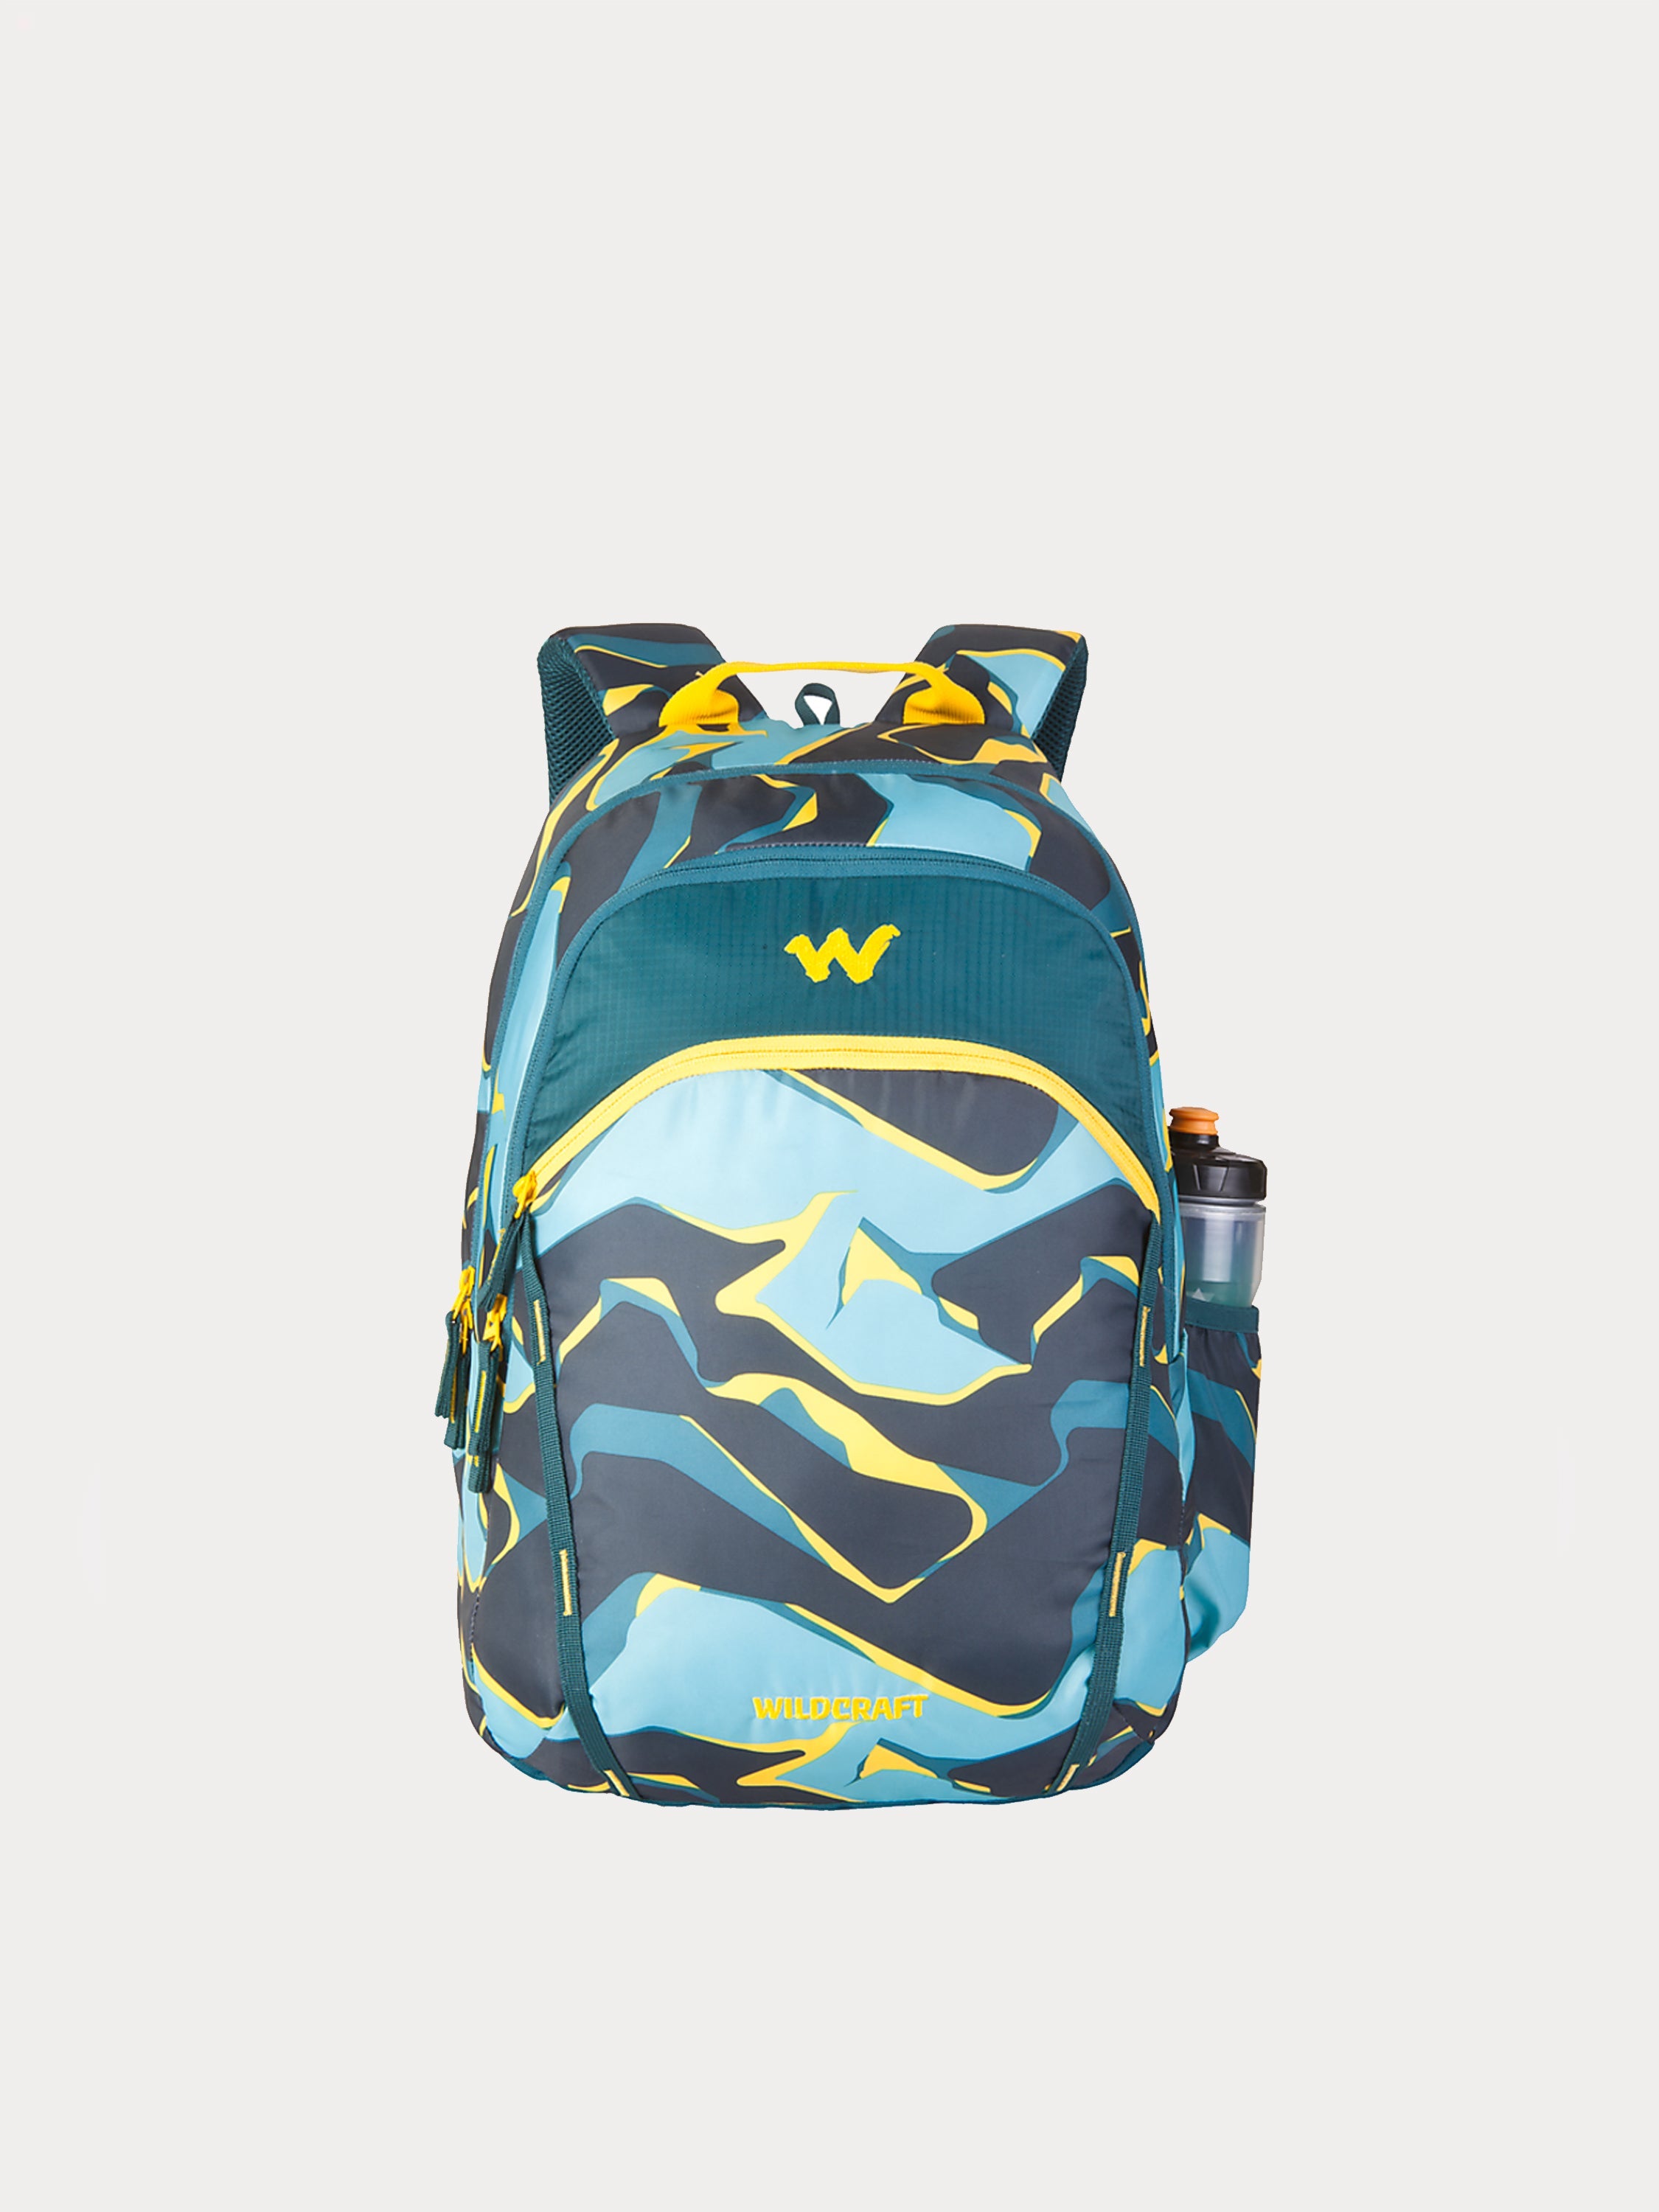 Wildcraft 2 Pablo Backpack